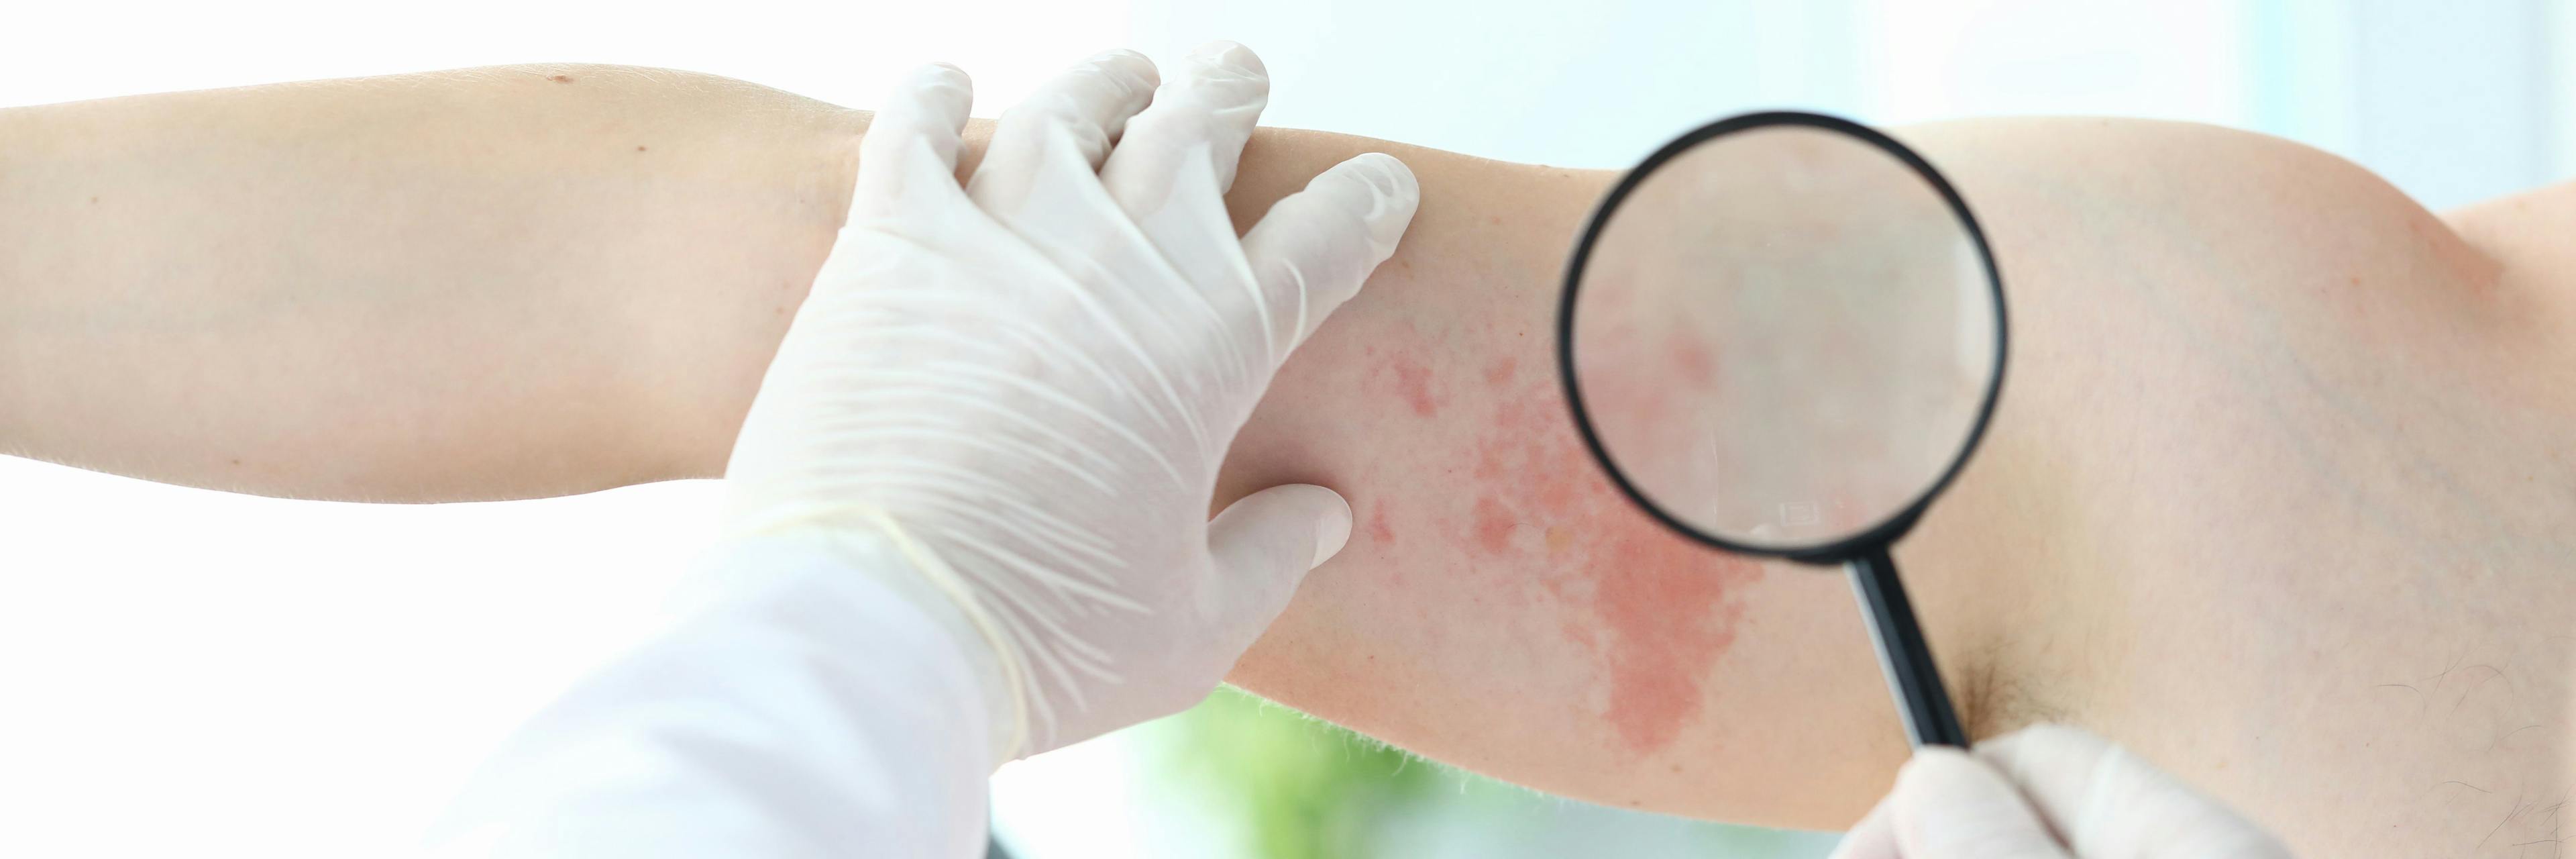 Preventing Misdiagnosis of Rare Skin Diseases